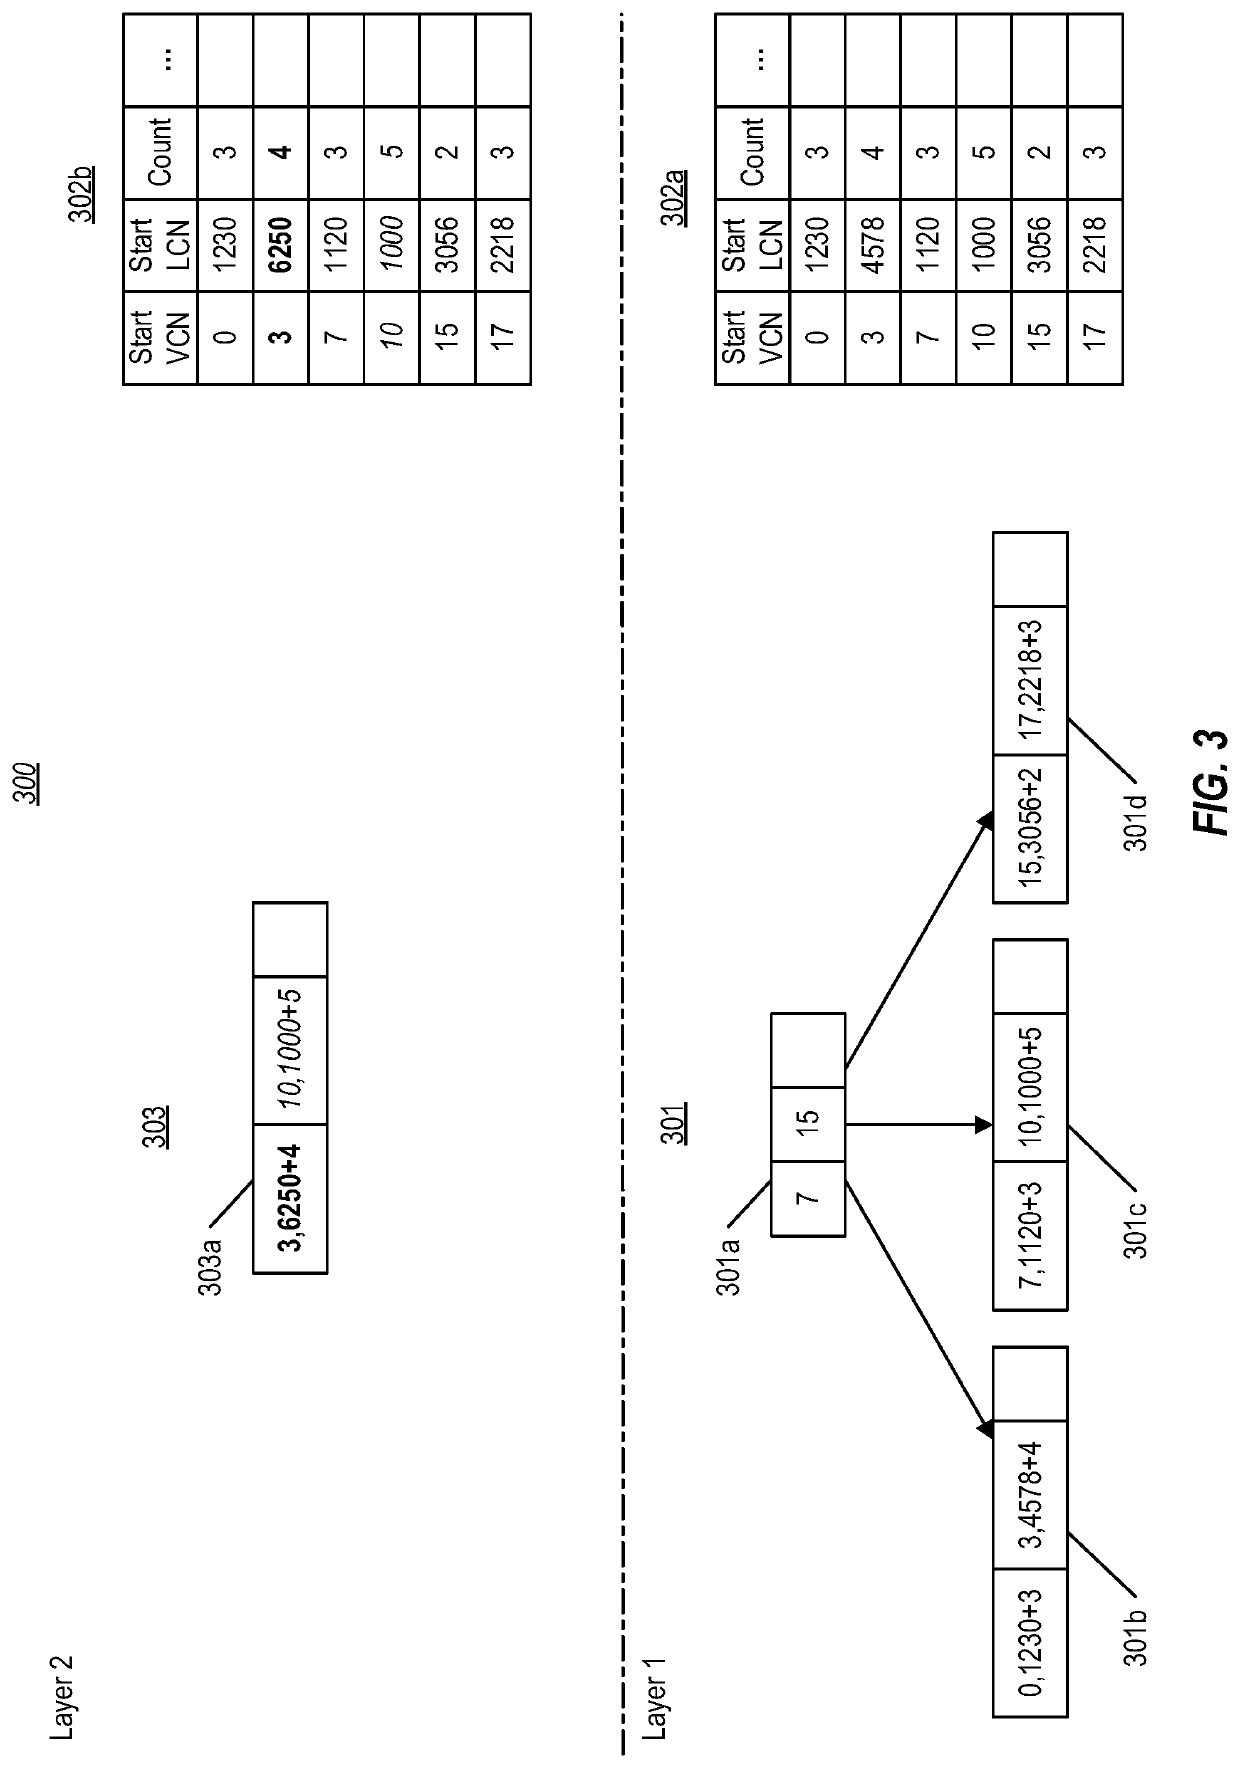 Managing snapshotting of a dataset using an ordered set of b+ trees